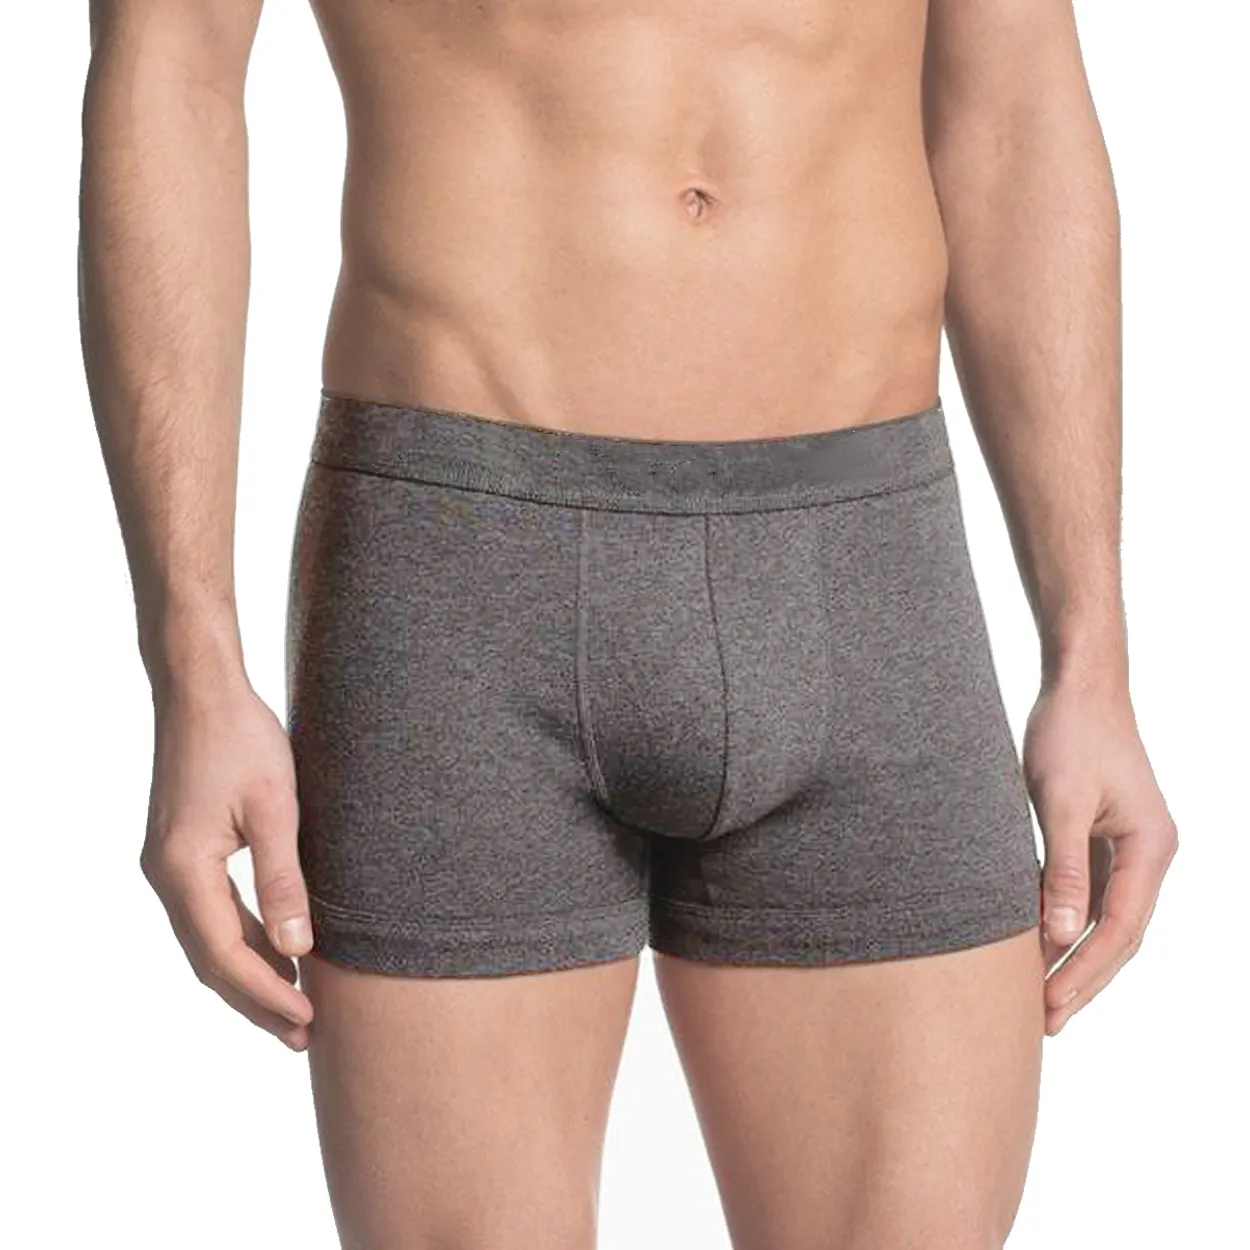 nondeformation high quality factory sale EU certificate briefs underwear underpant boxer for men&women